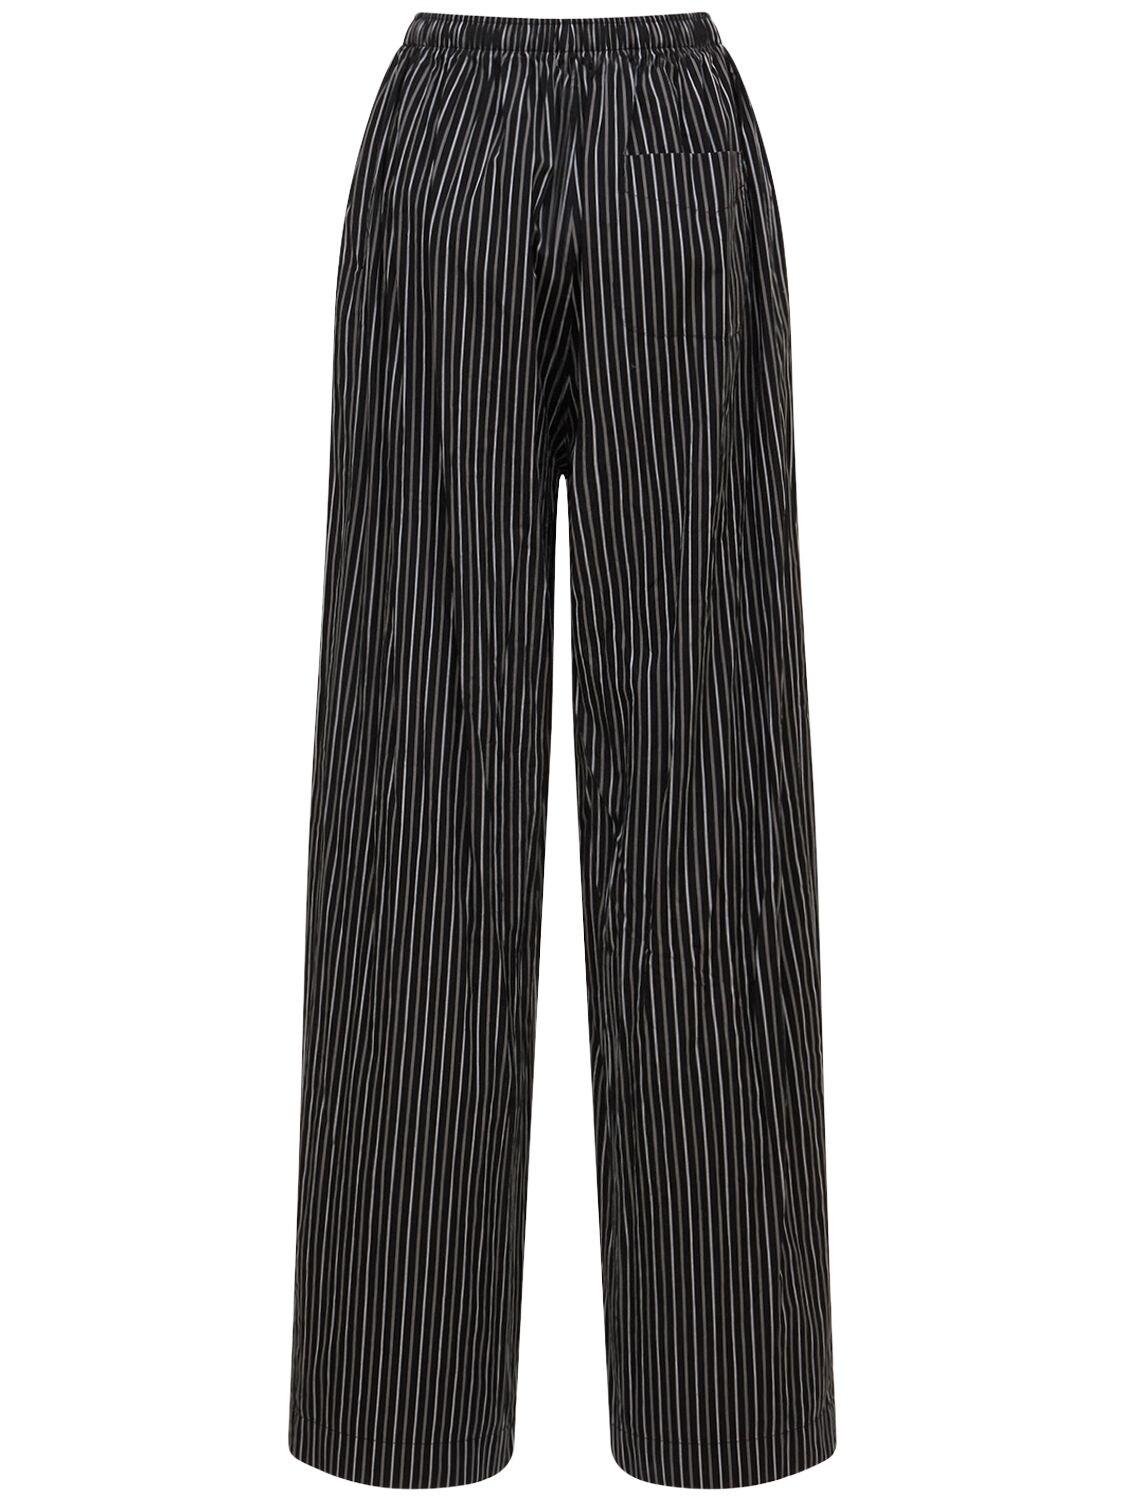 Balenciaga Striped Poplin Pants in Black | Lyst